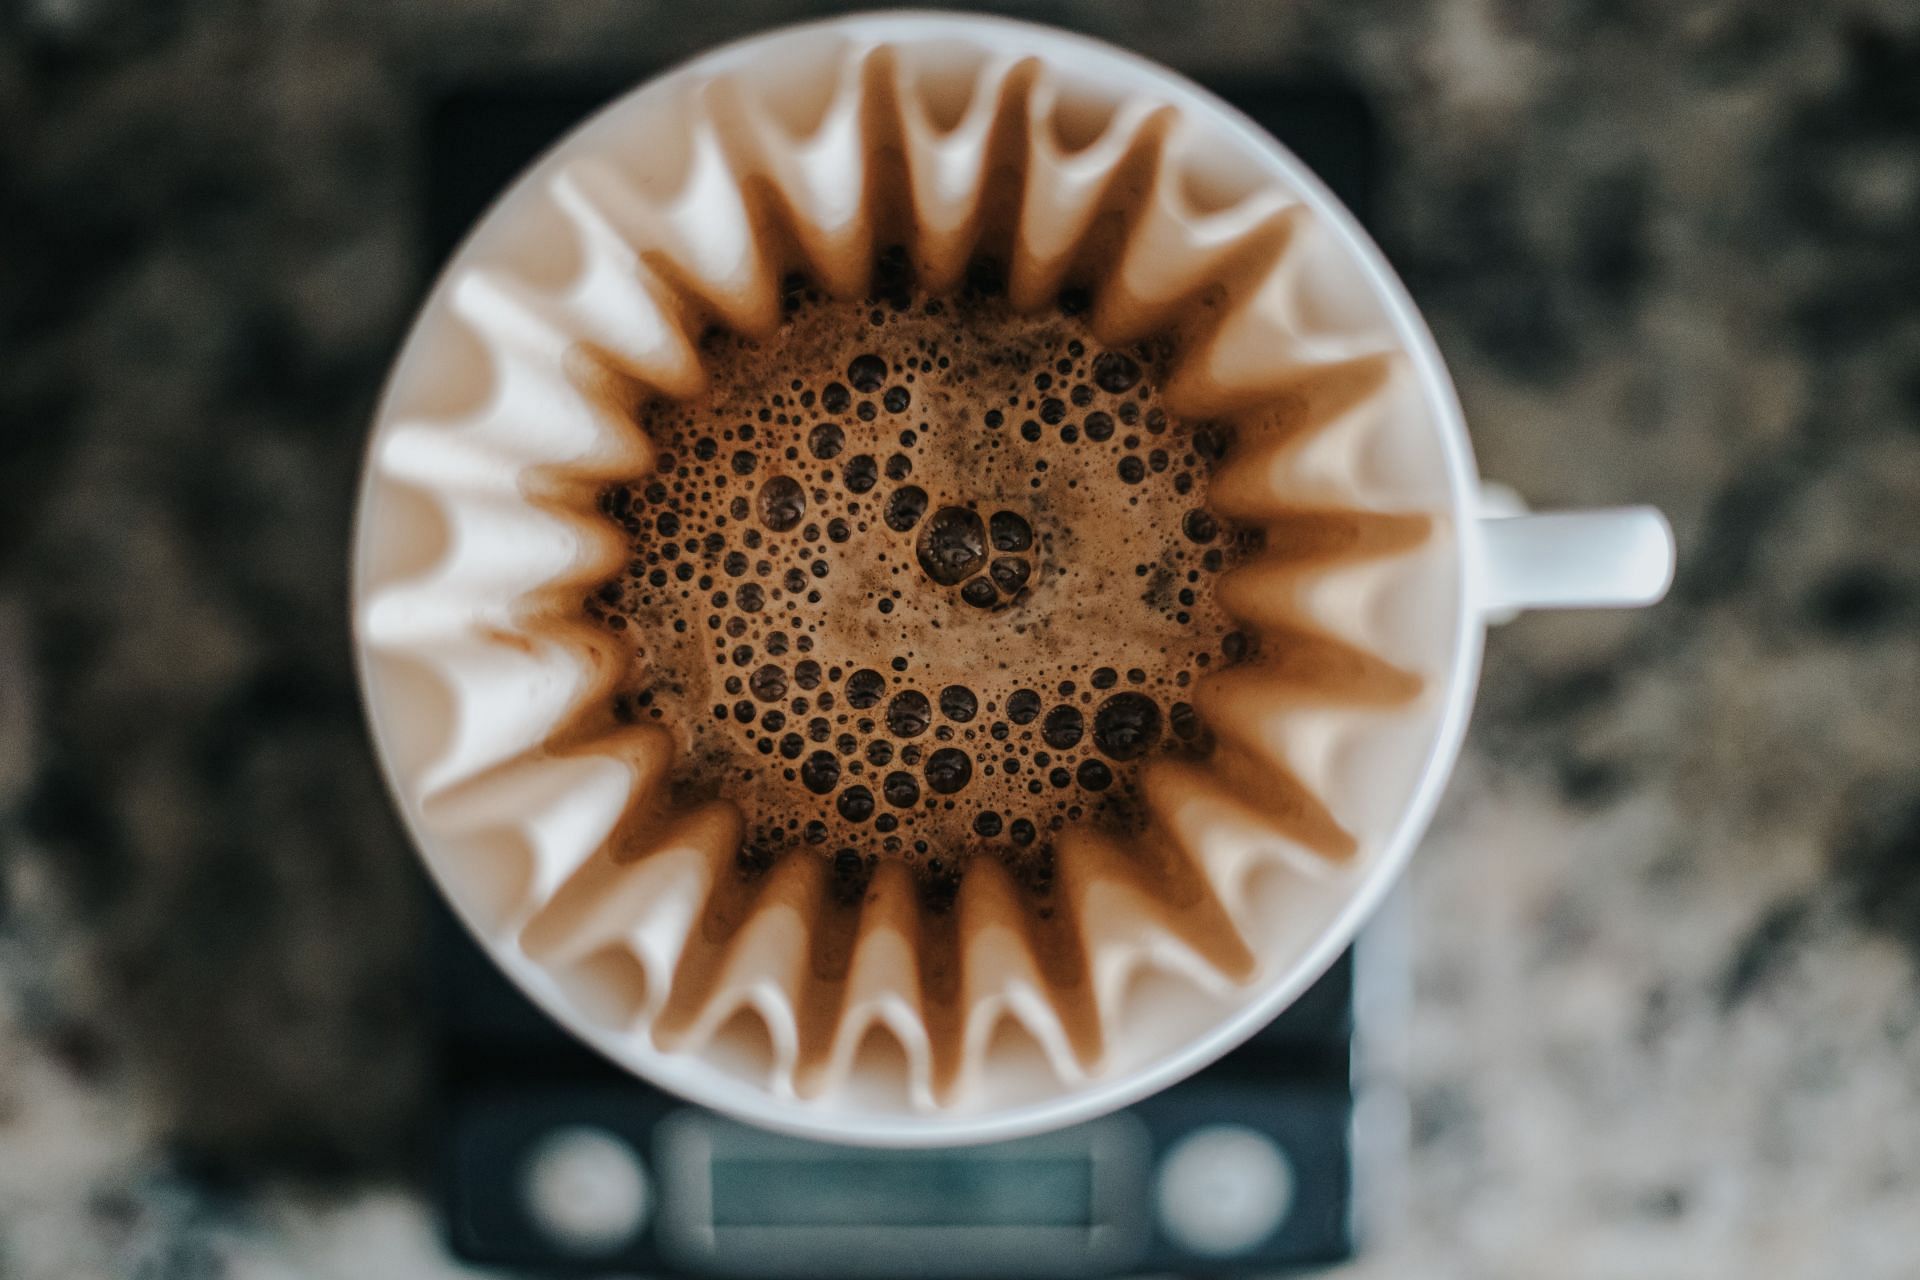 Surprising health benefits if black coffee. (Image via Unsplash / Devin Avery )